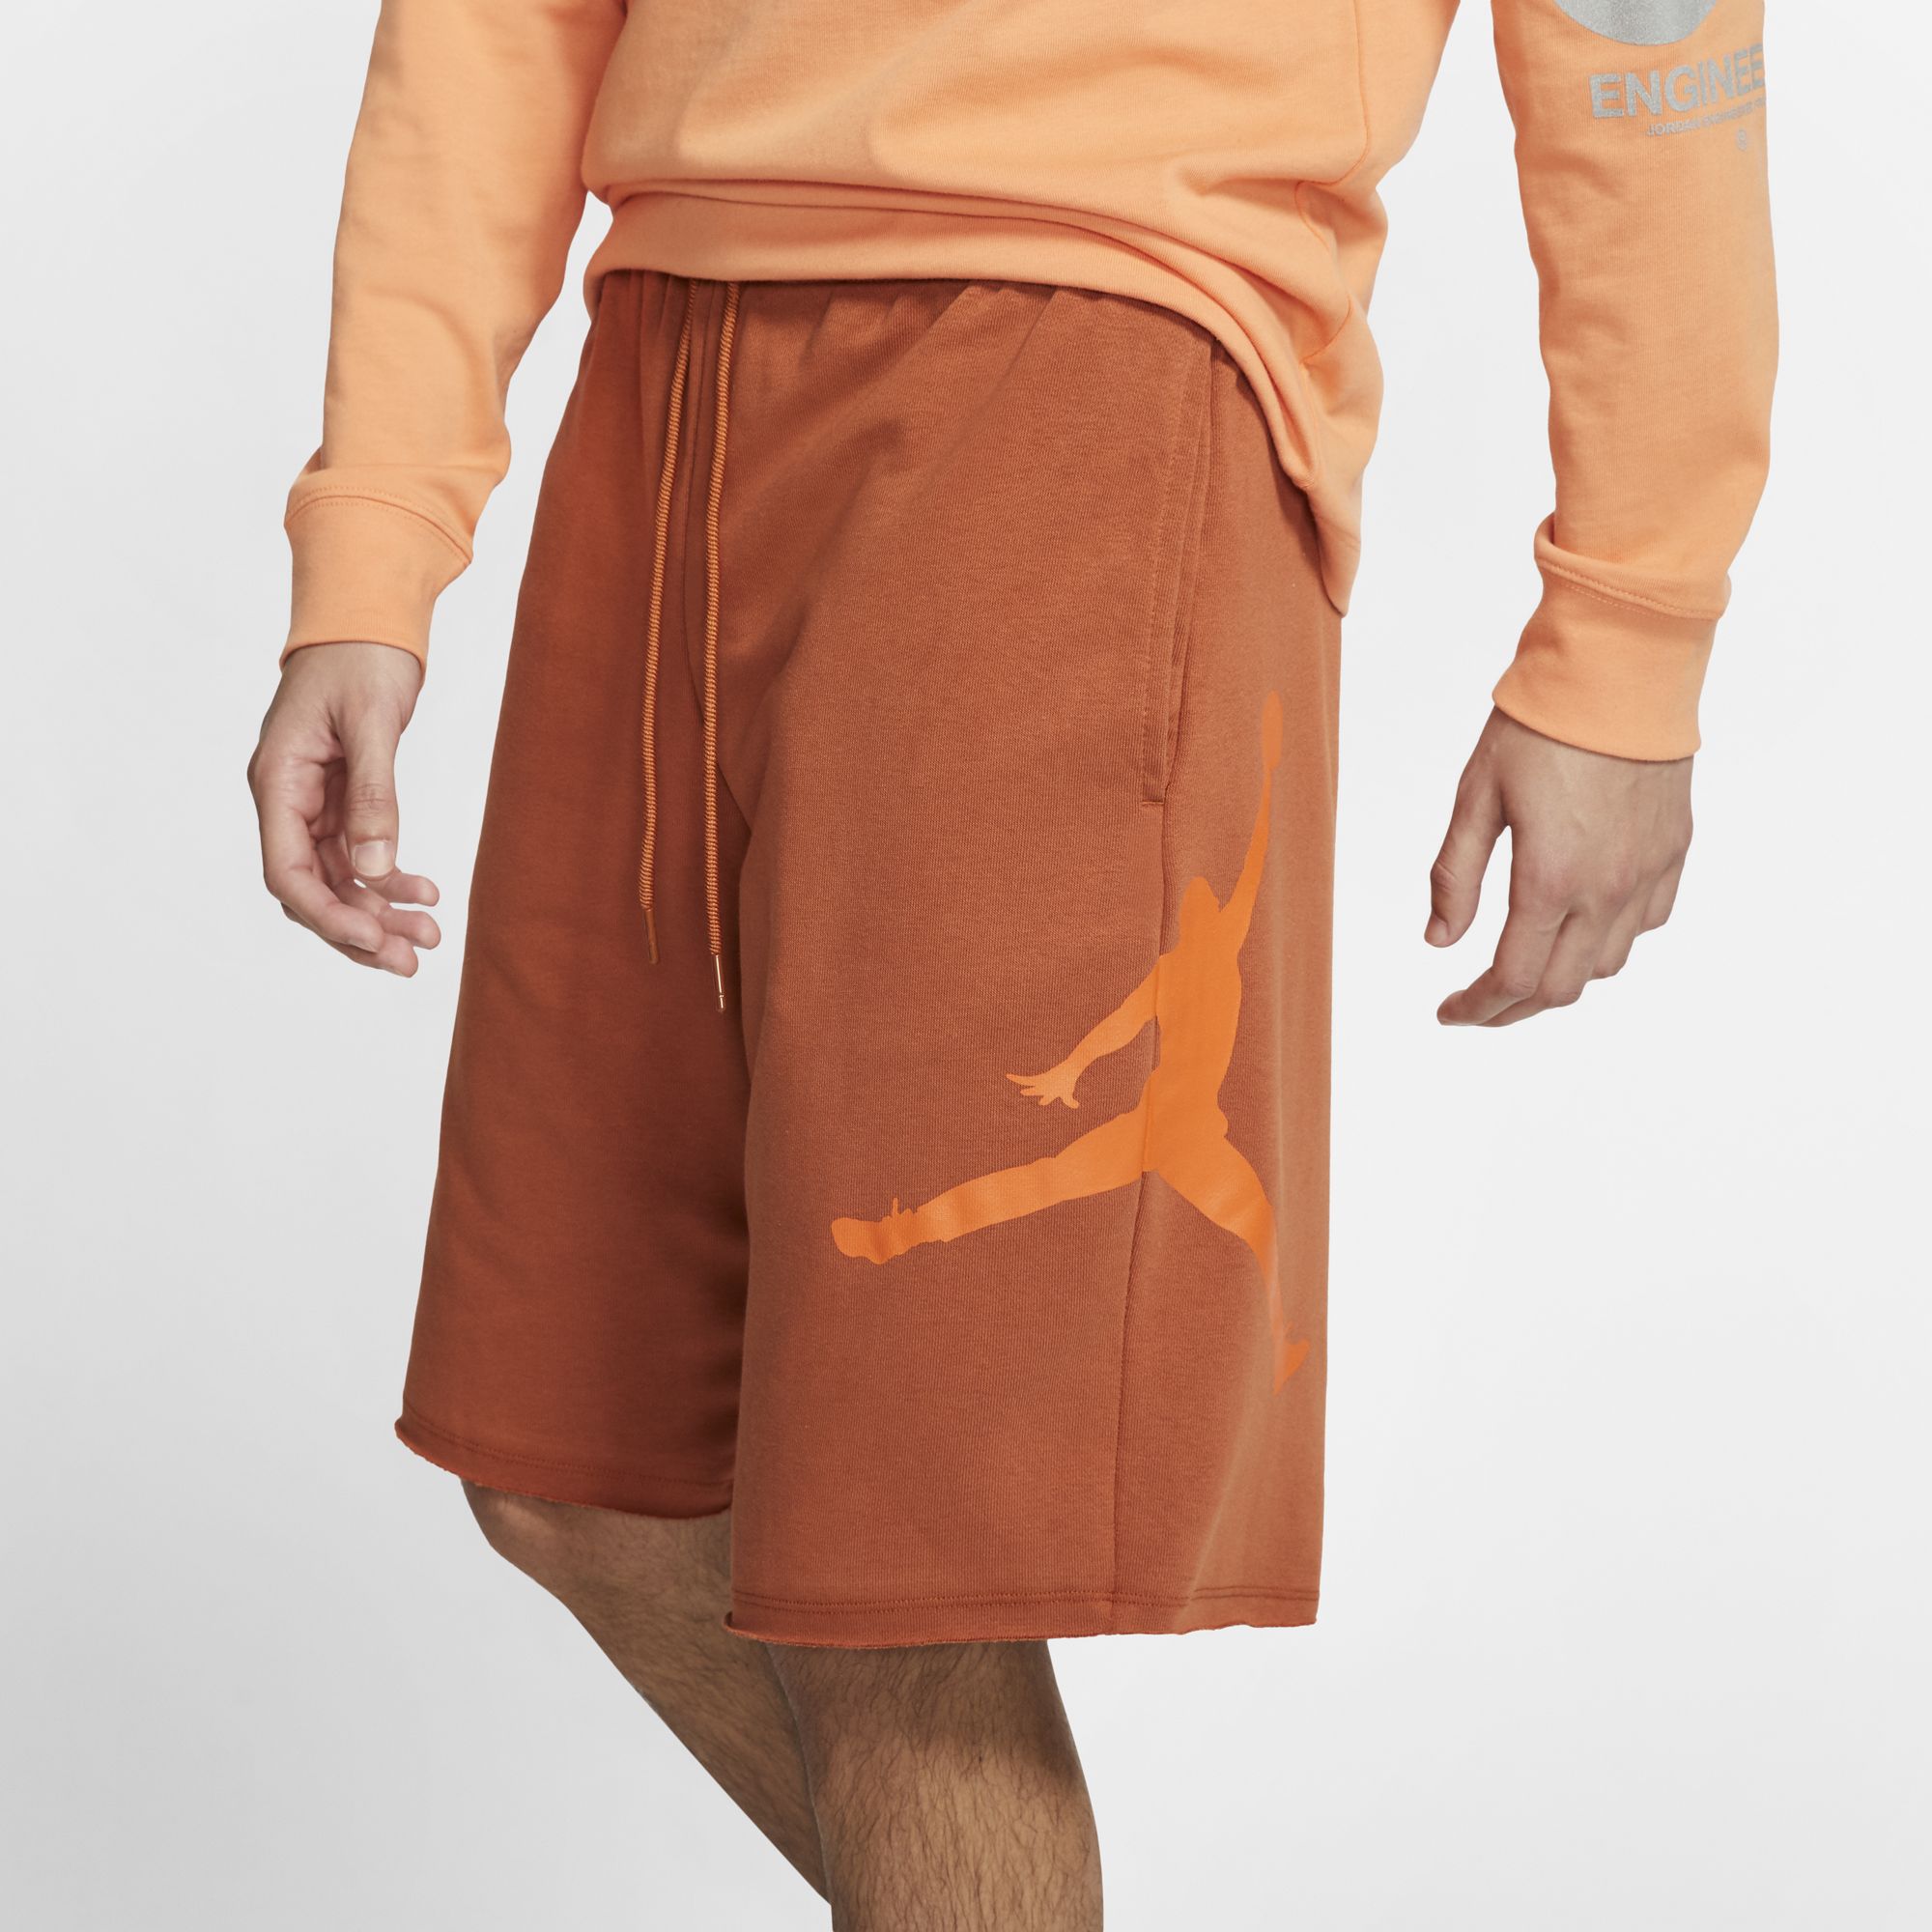 jordan jumpman logo fleece shorts